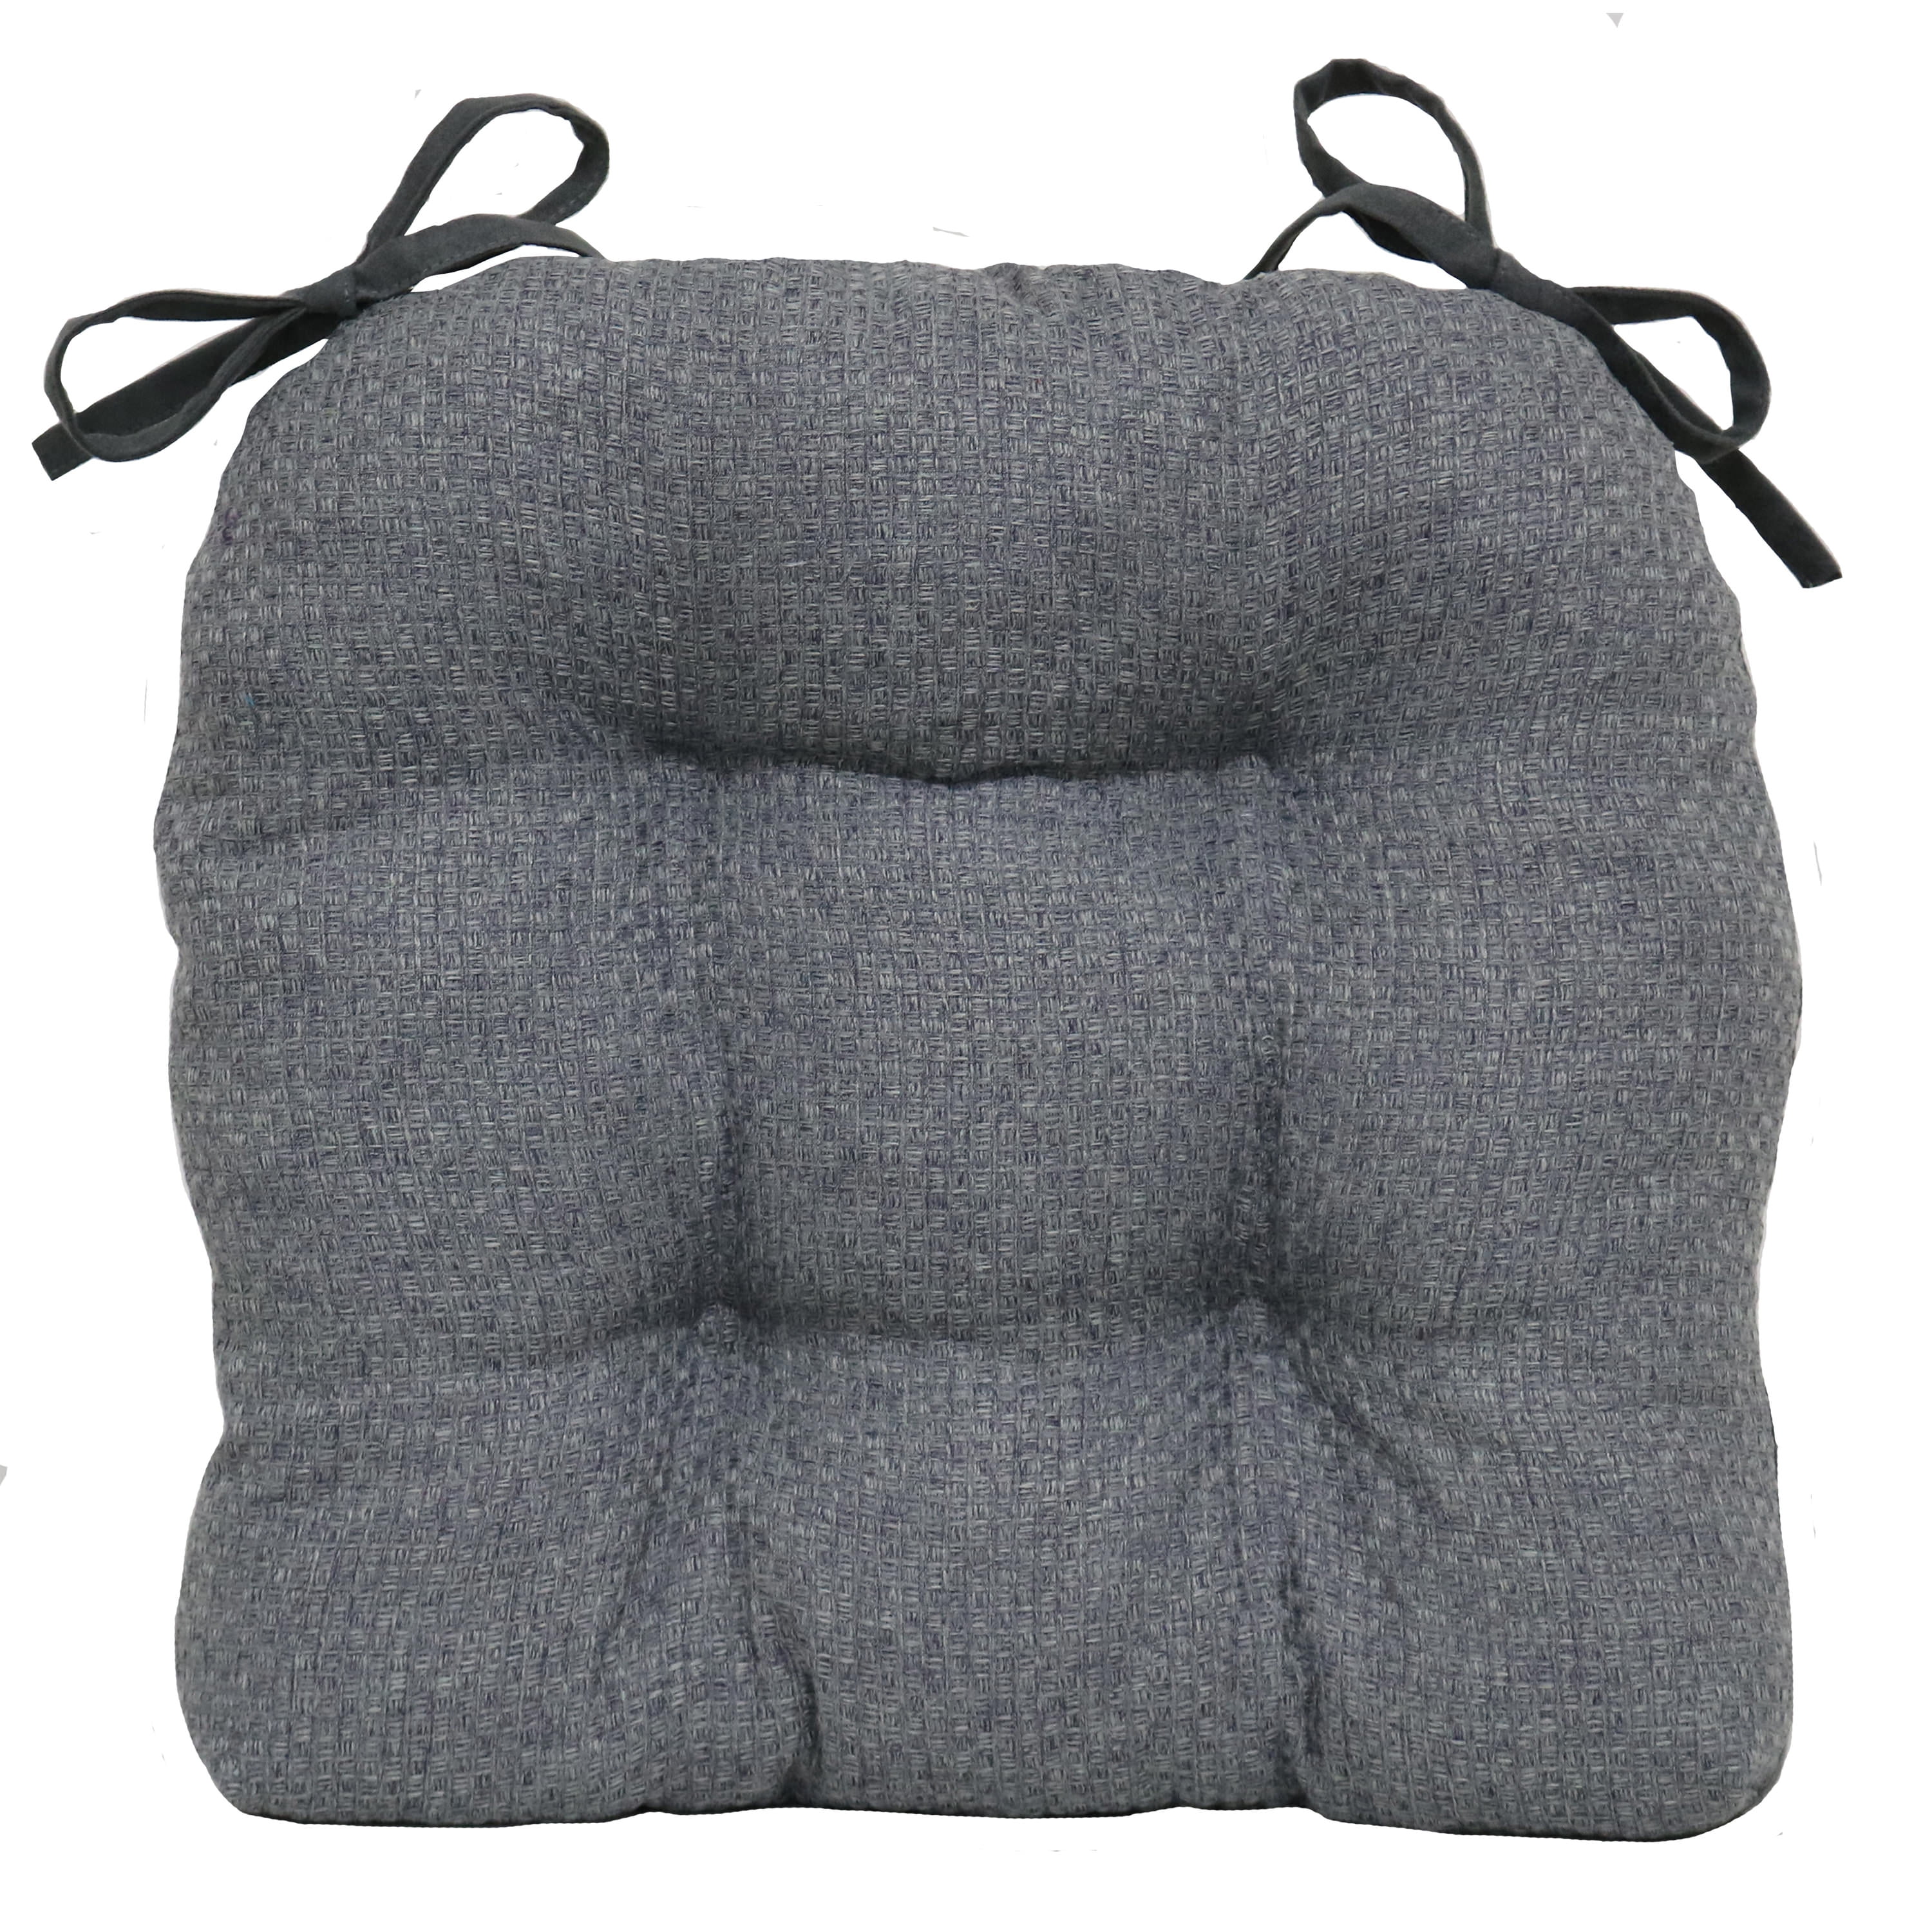 2 X 18 X 20 Charcoal High Density Upholstery Foam Cushion, Foam Padding,  Seat Replacement, Cushion Replacement, Wheelchair Cushion 